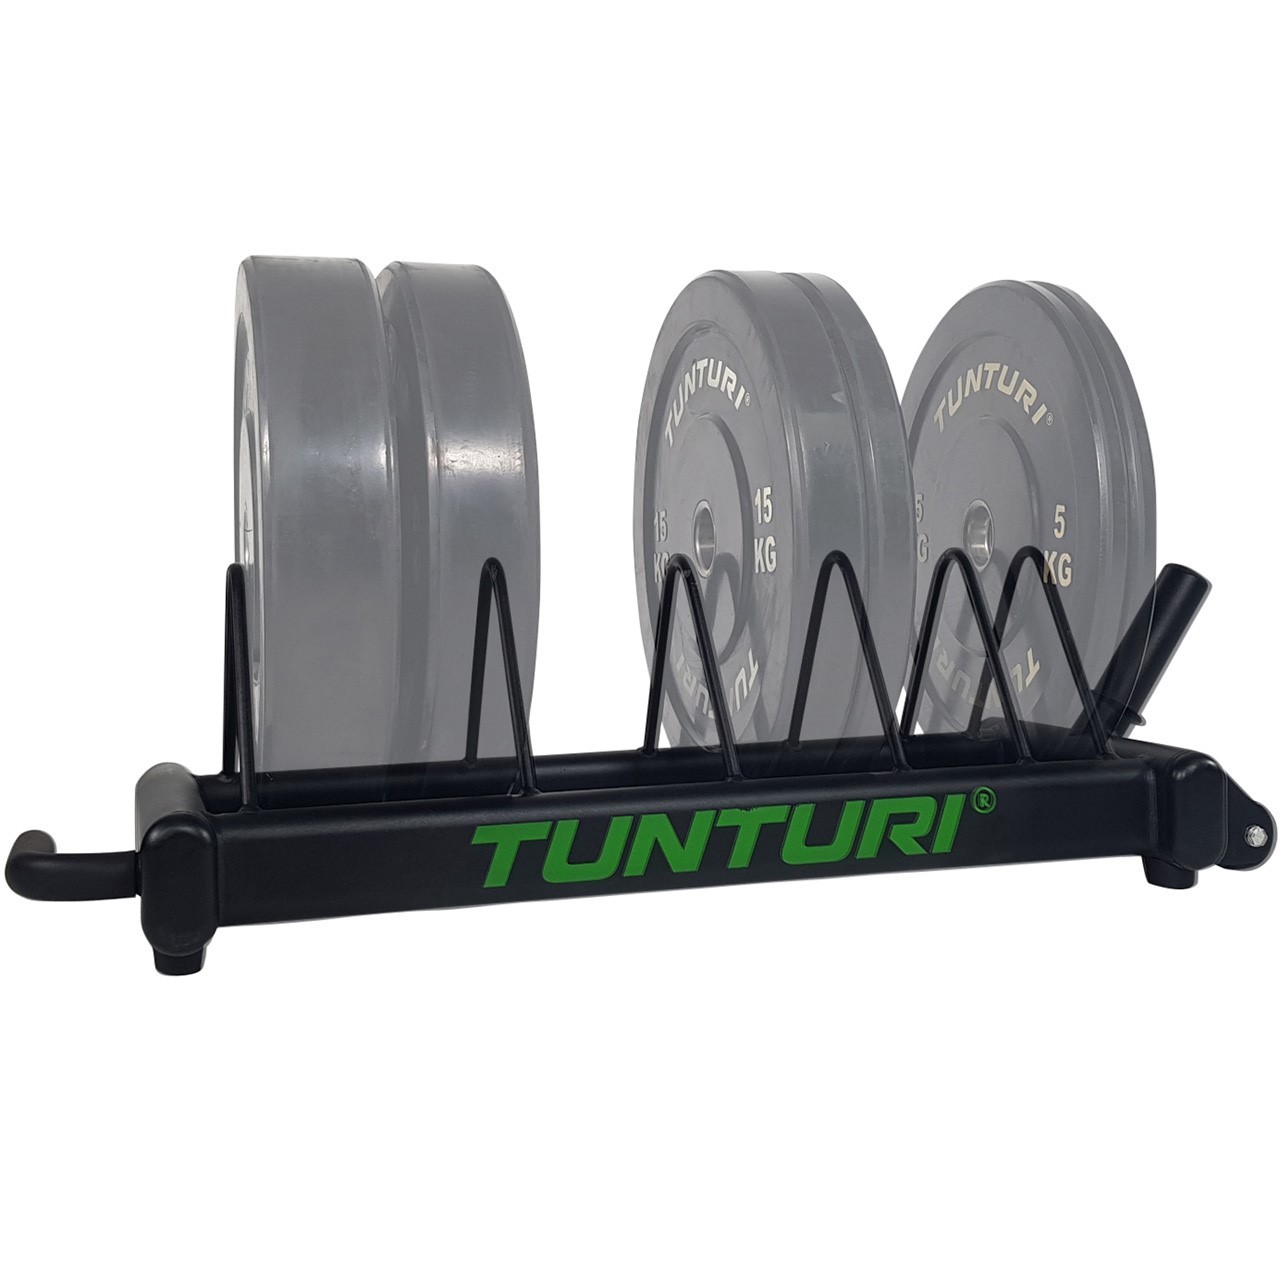 Tunturi Bumper Plate Carry Rack on Wheels